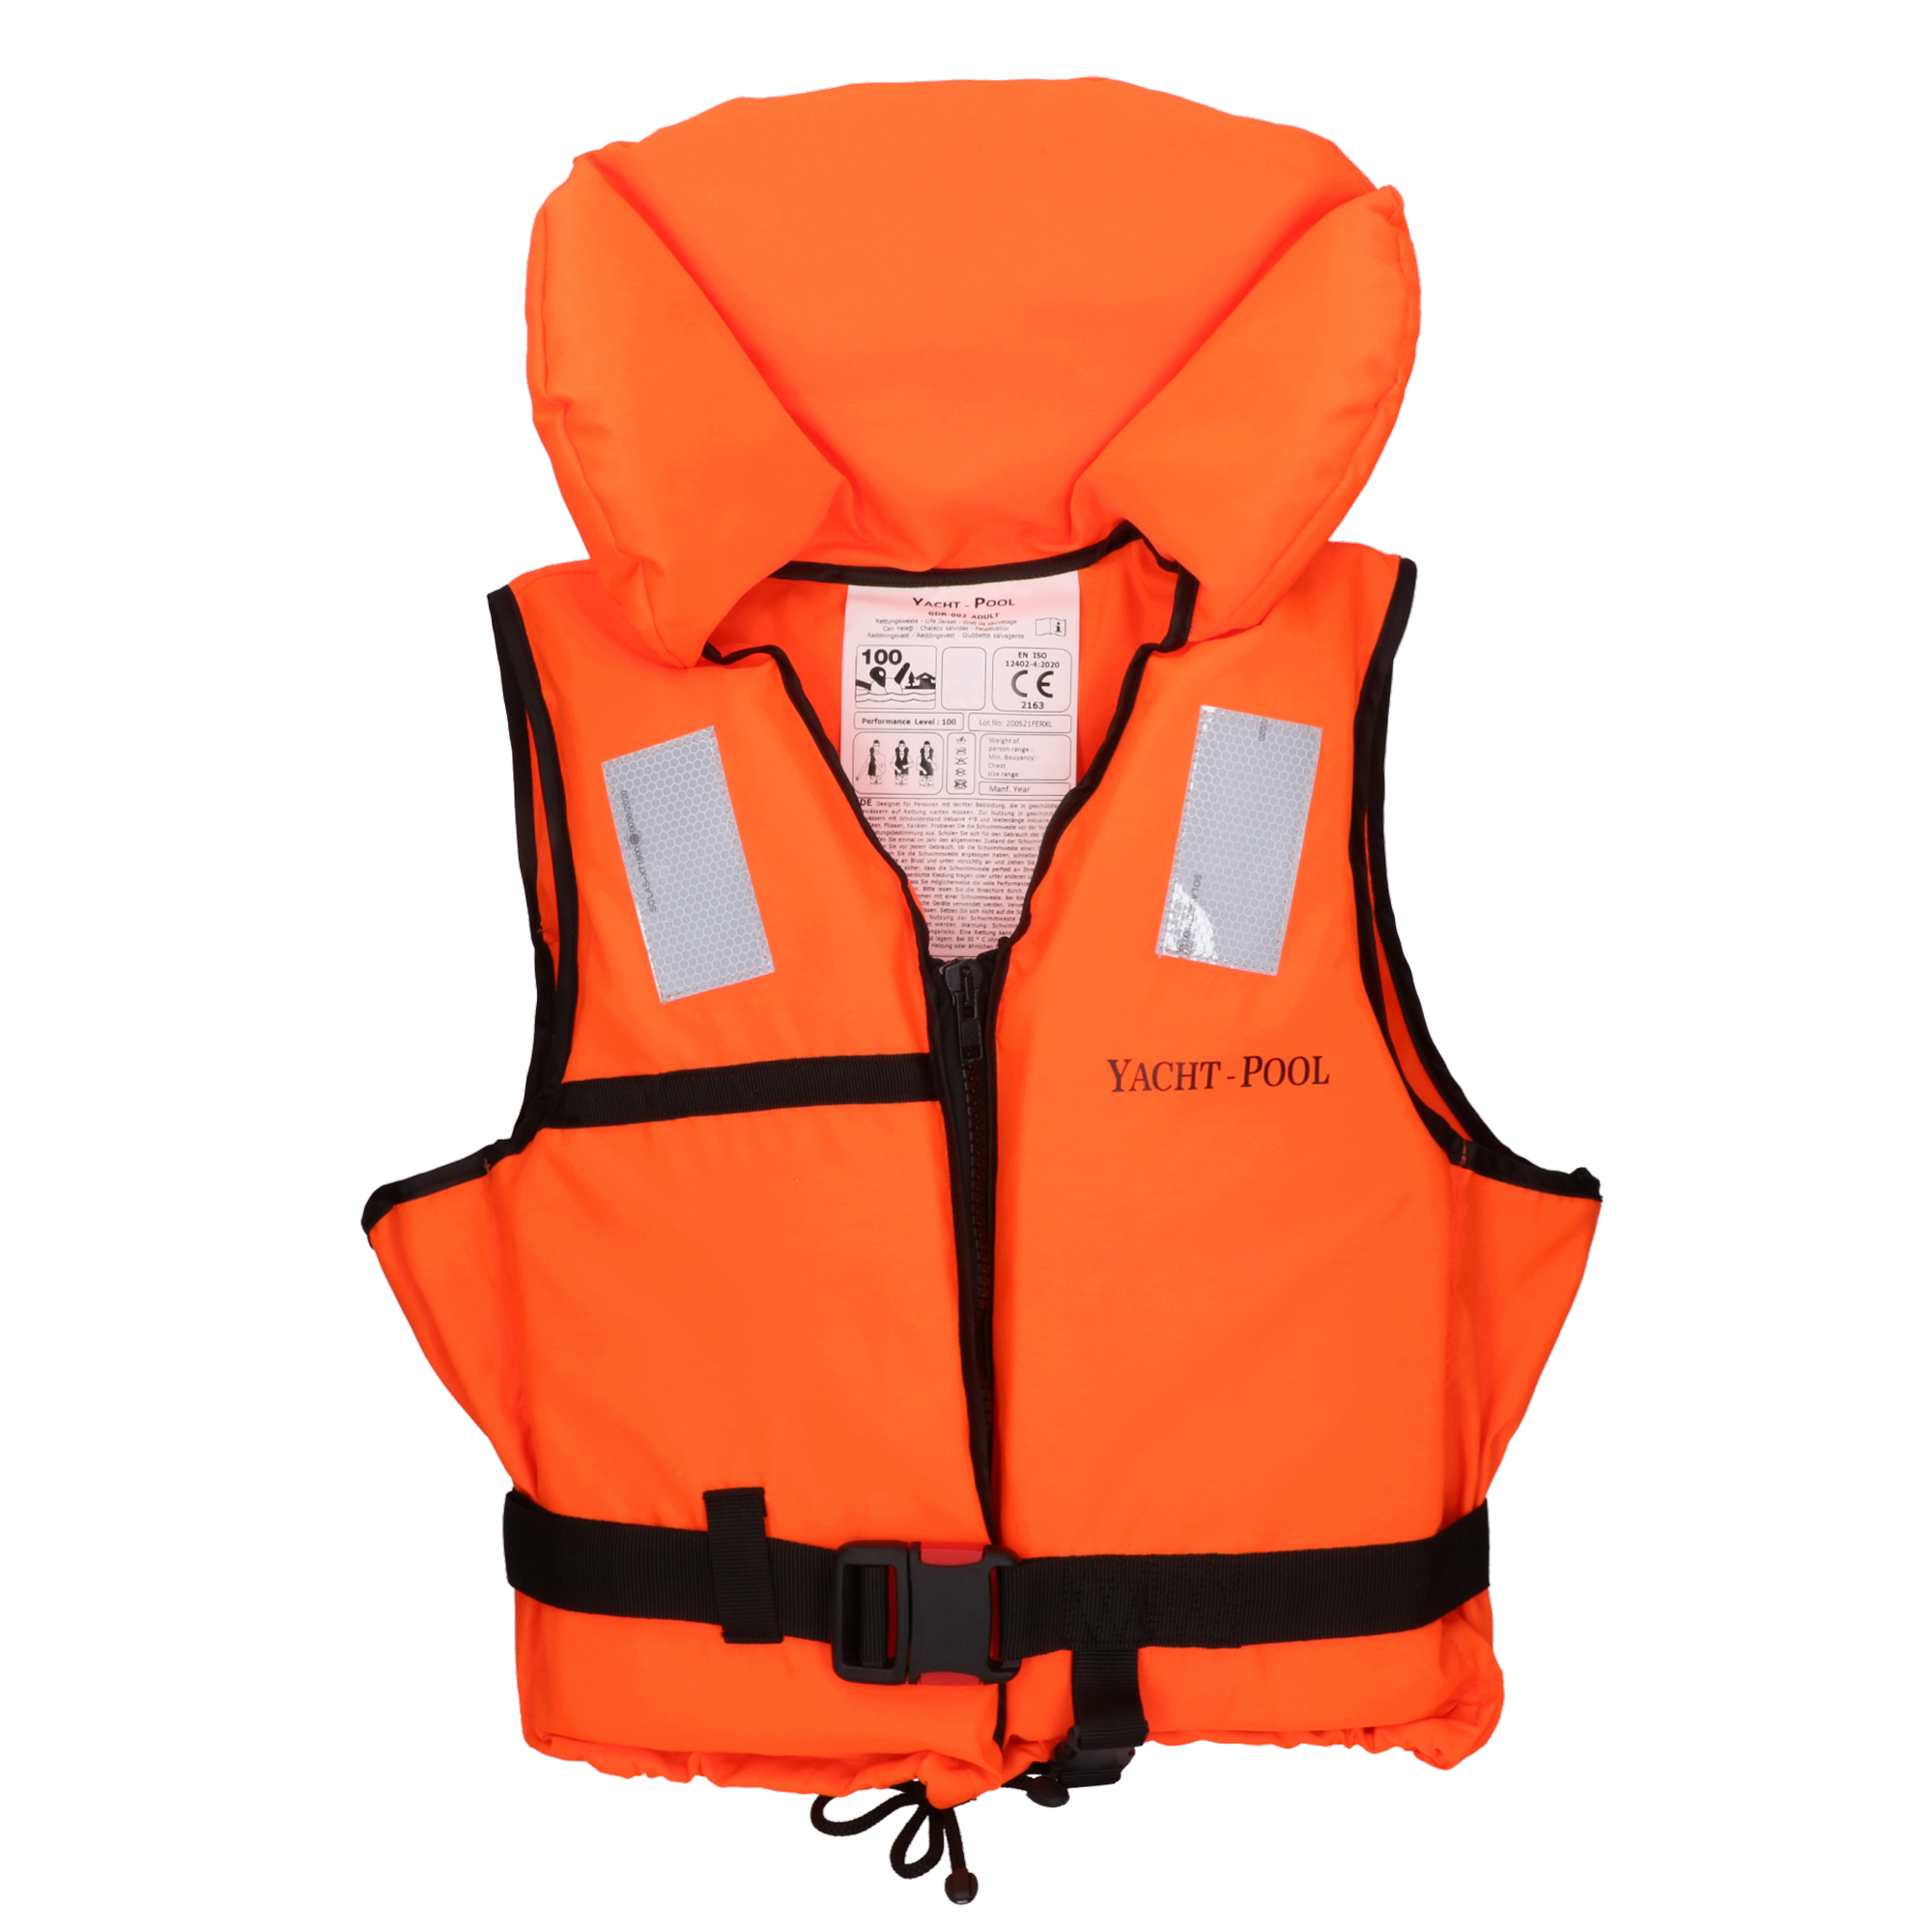 YACHT-POOL life jacket 100 N